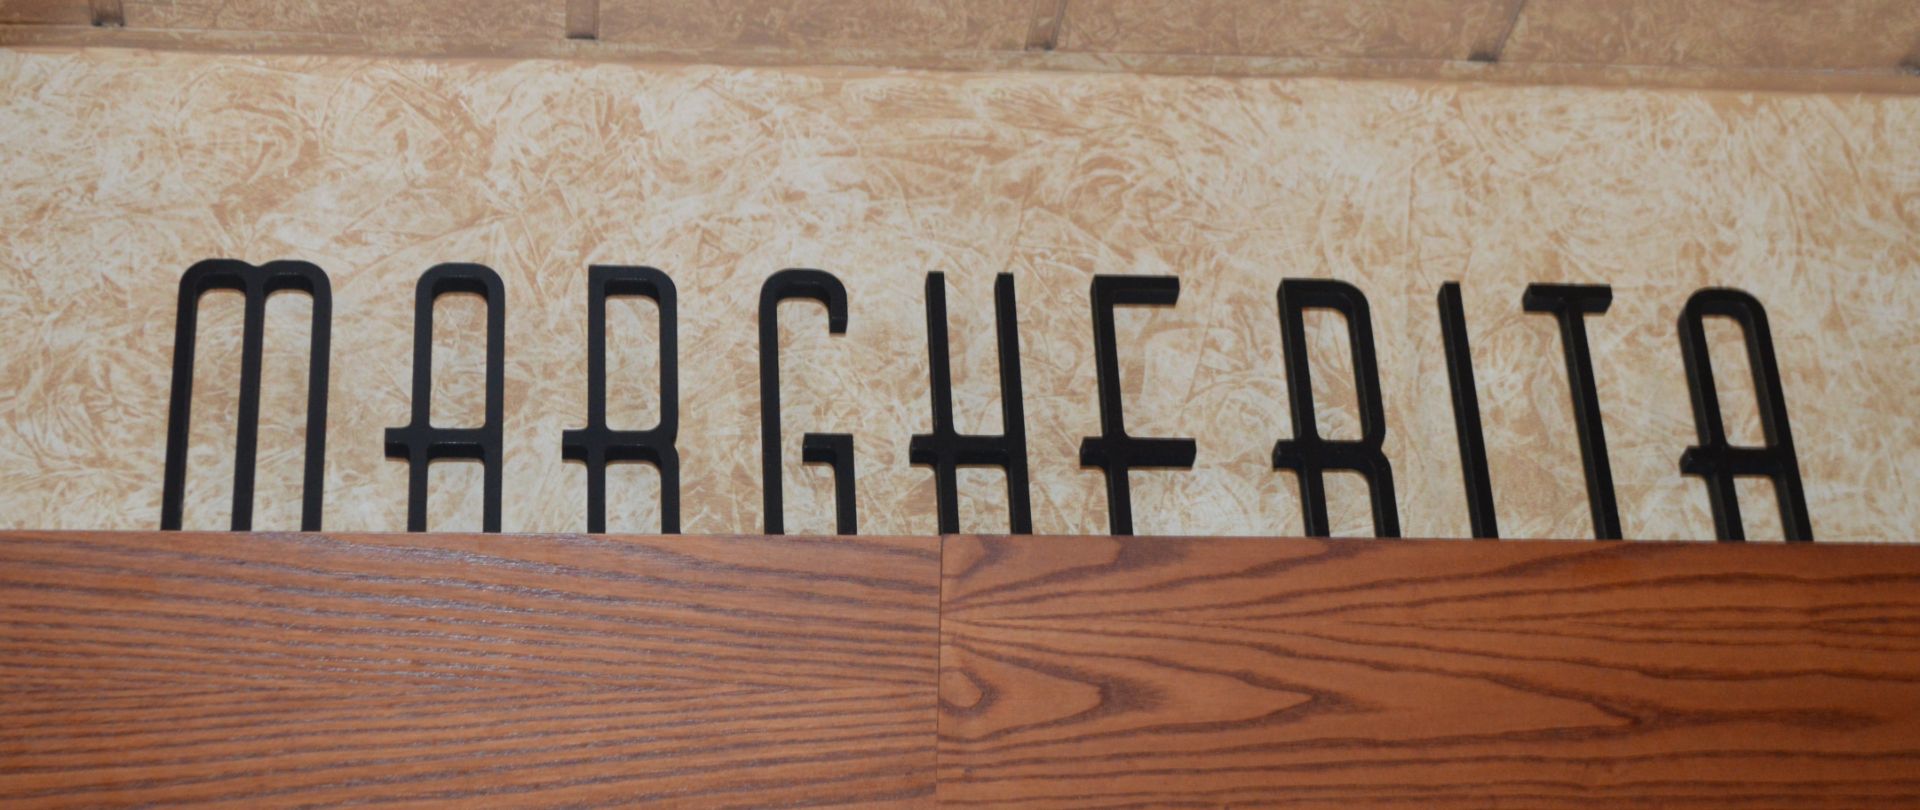 7 x Wooden Signs Suitable For Restaurants, Cafes, Bistros etc - Includes Pasta, Lasagne, - Image 3 of 9